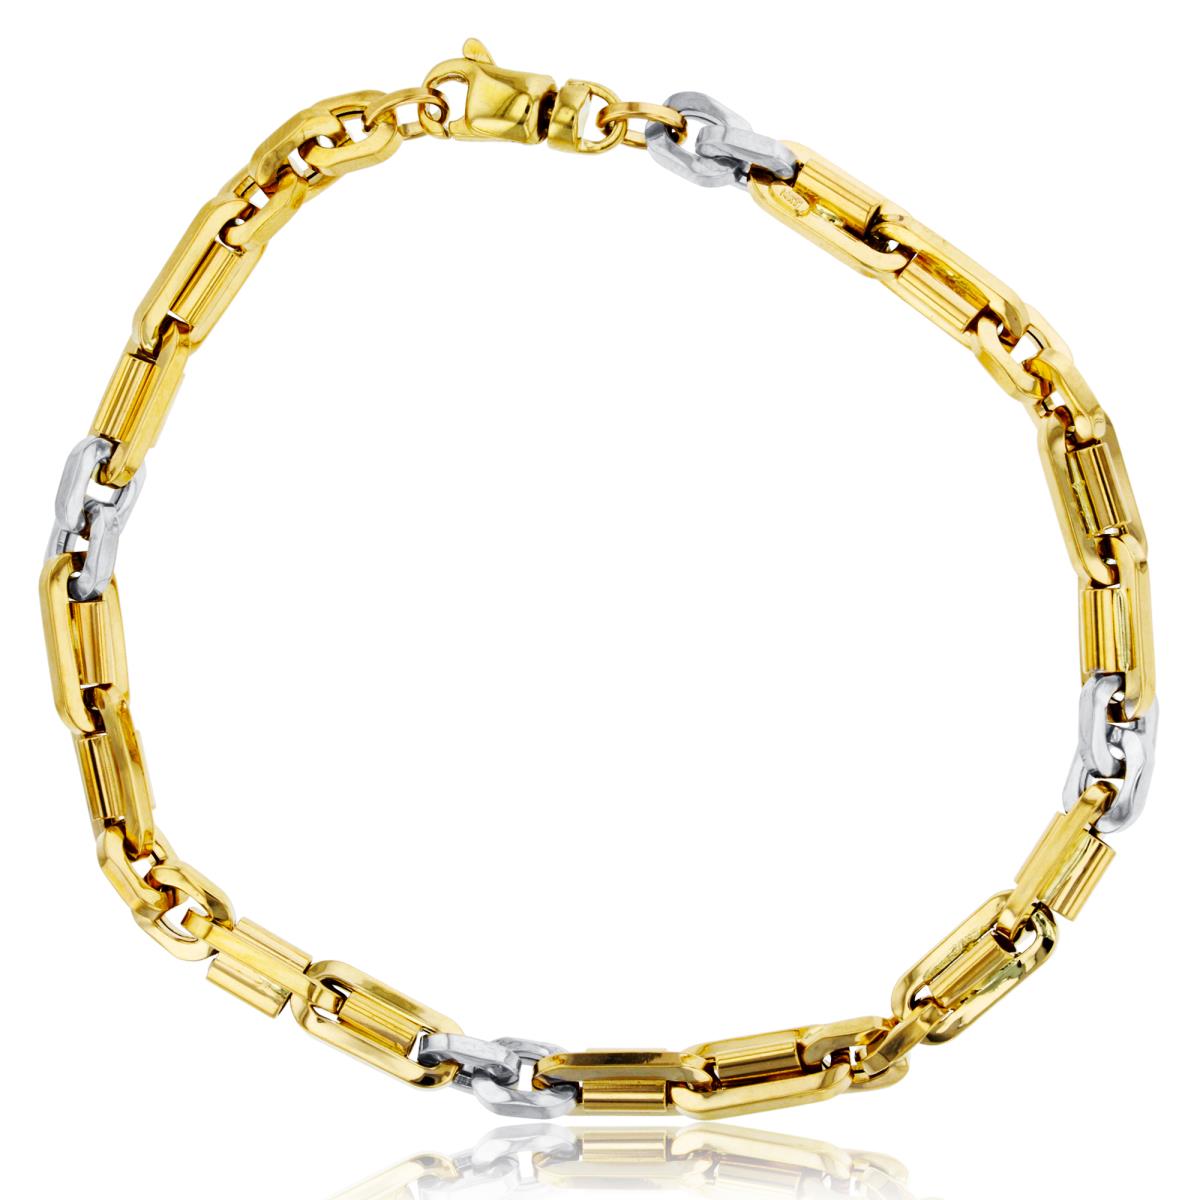 10K Yellow Gold Polished & Textured Links 8.5" Bracelet